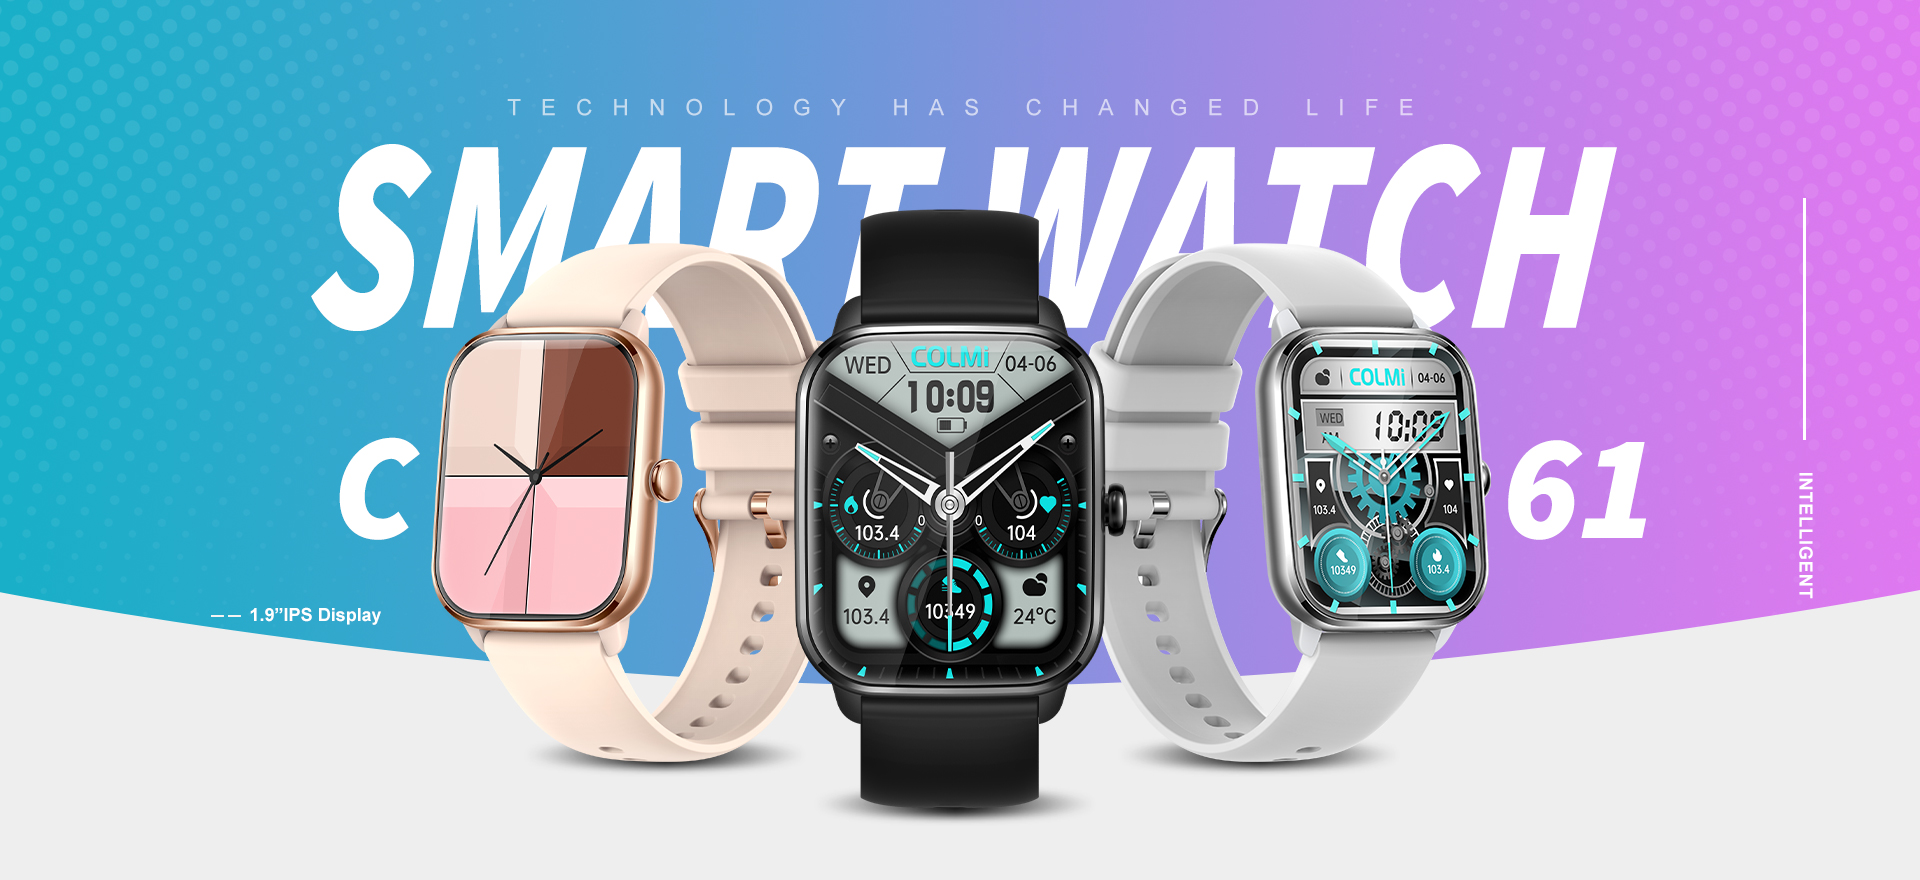 smartwatch smart wachi C61